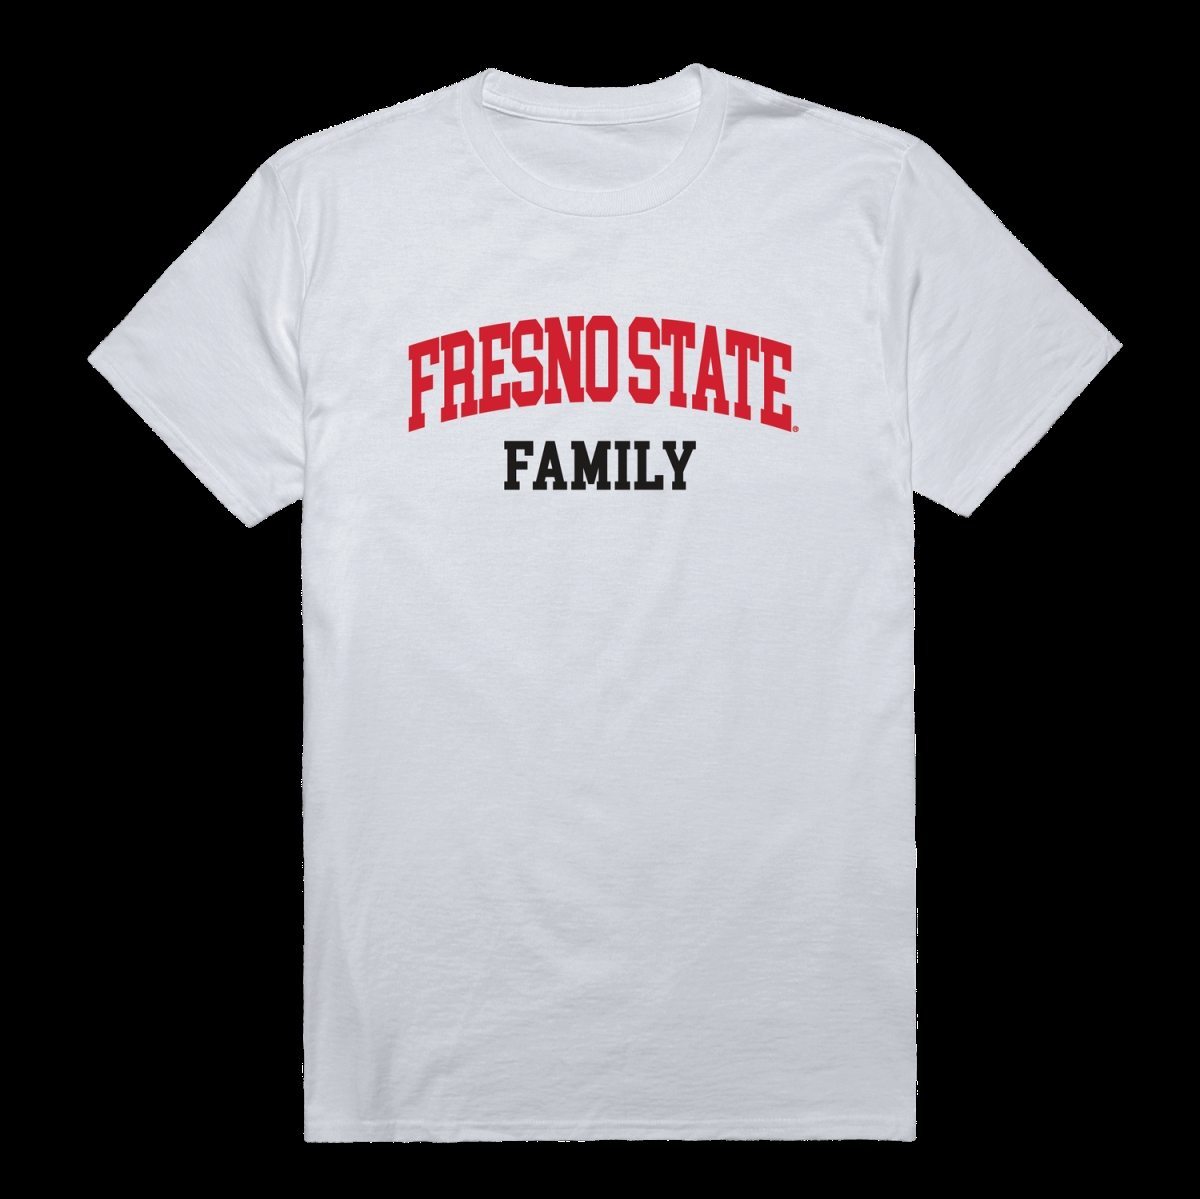 571-169-WHT-02 California State University, Fresno Bulldogs Family T-Shirt, White - Medium -  W Republic